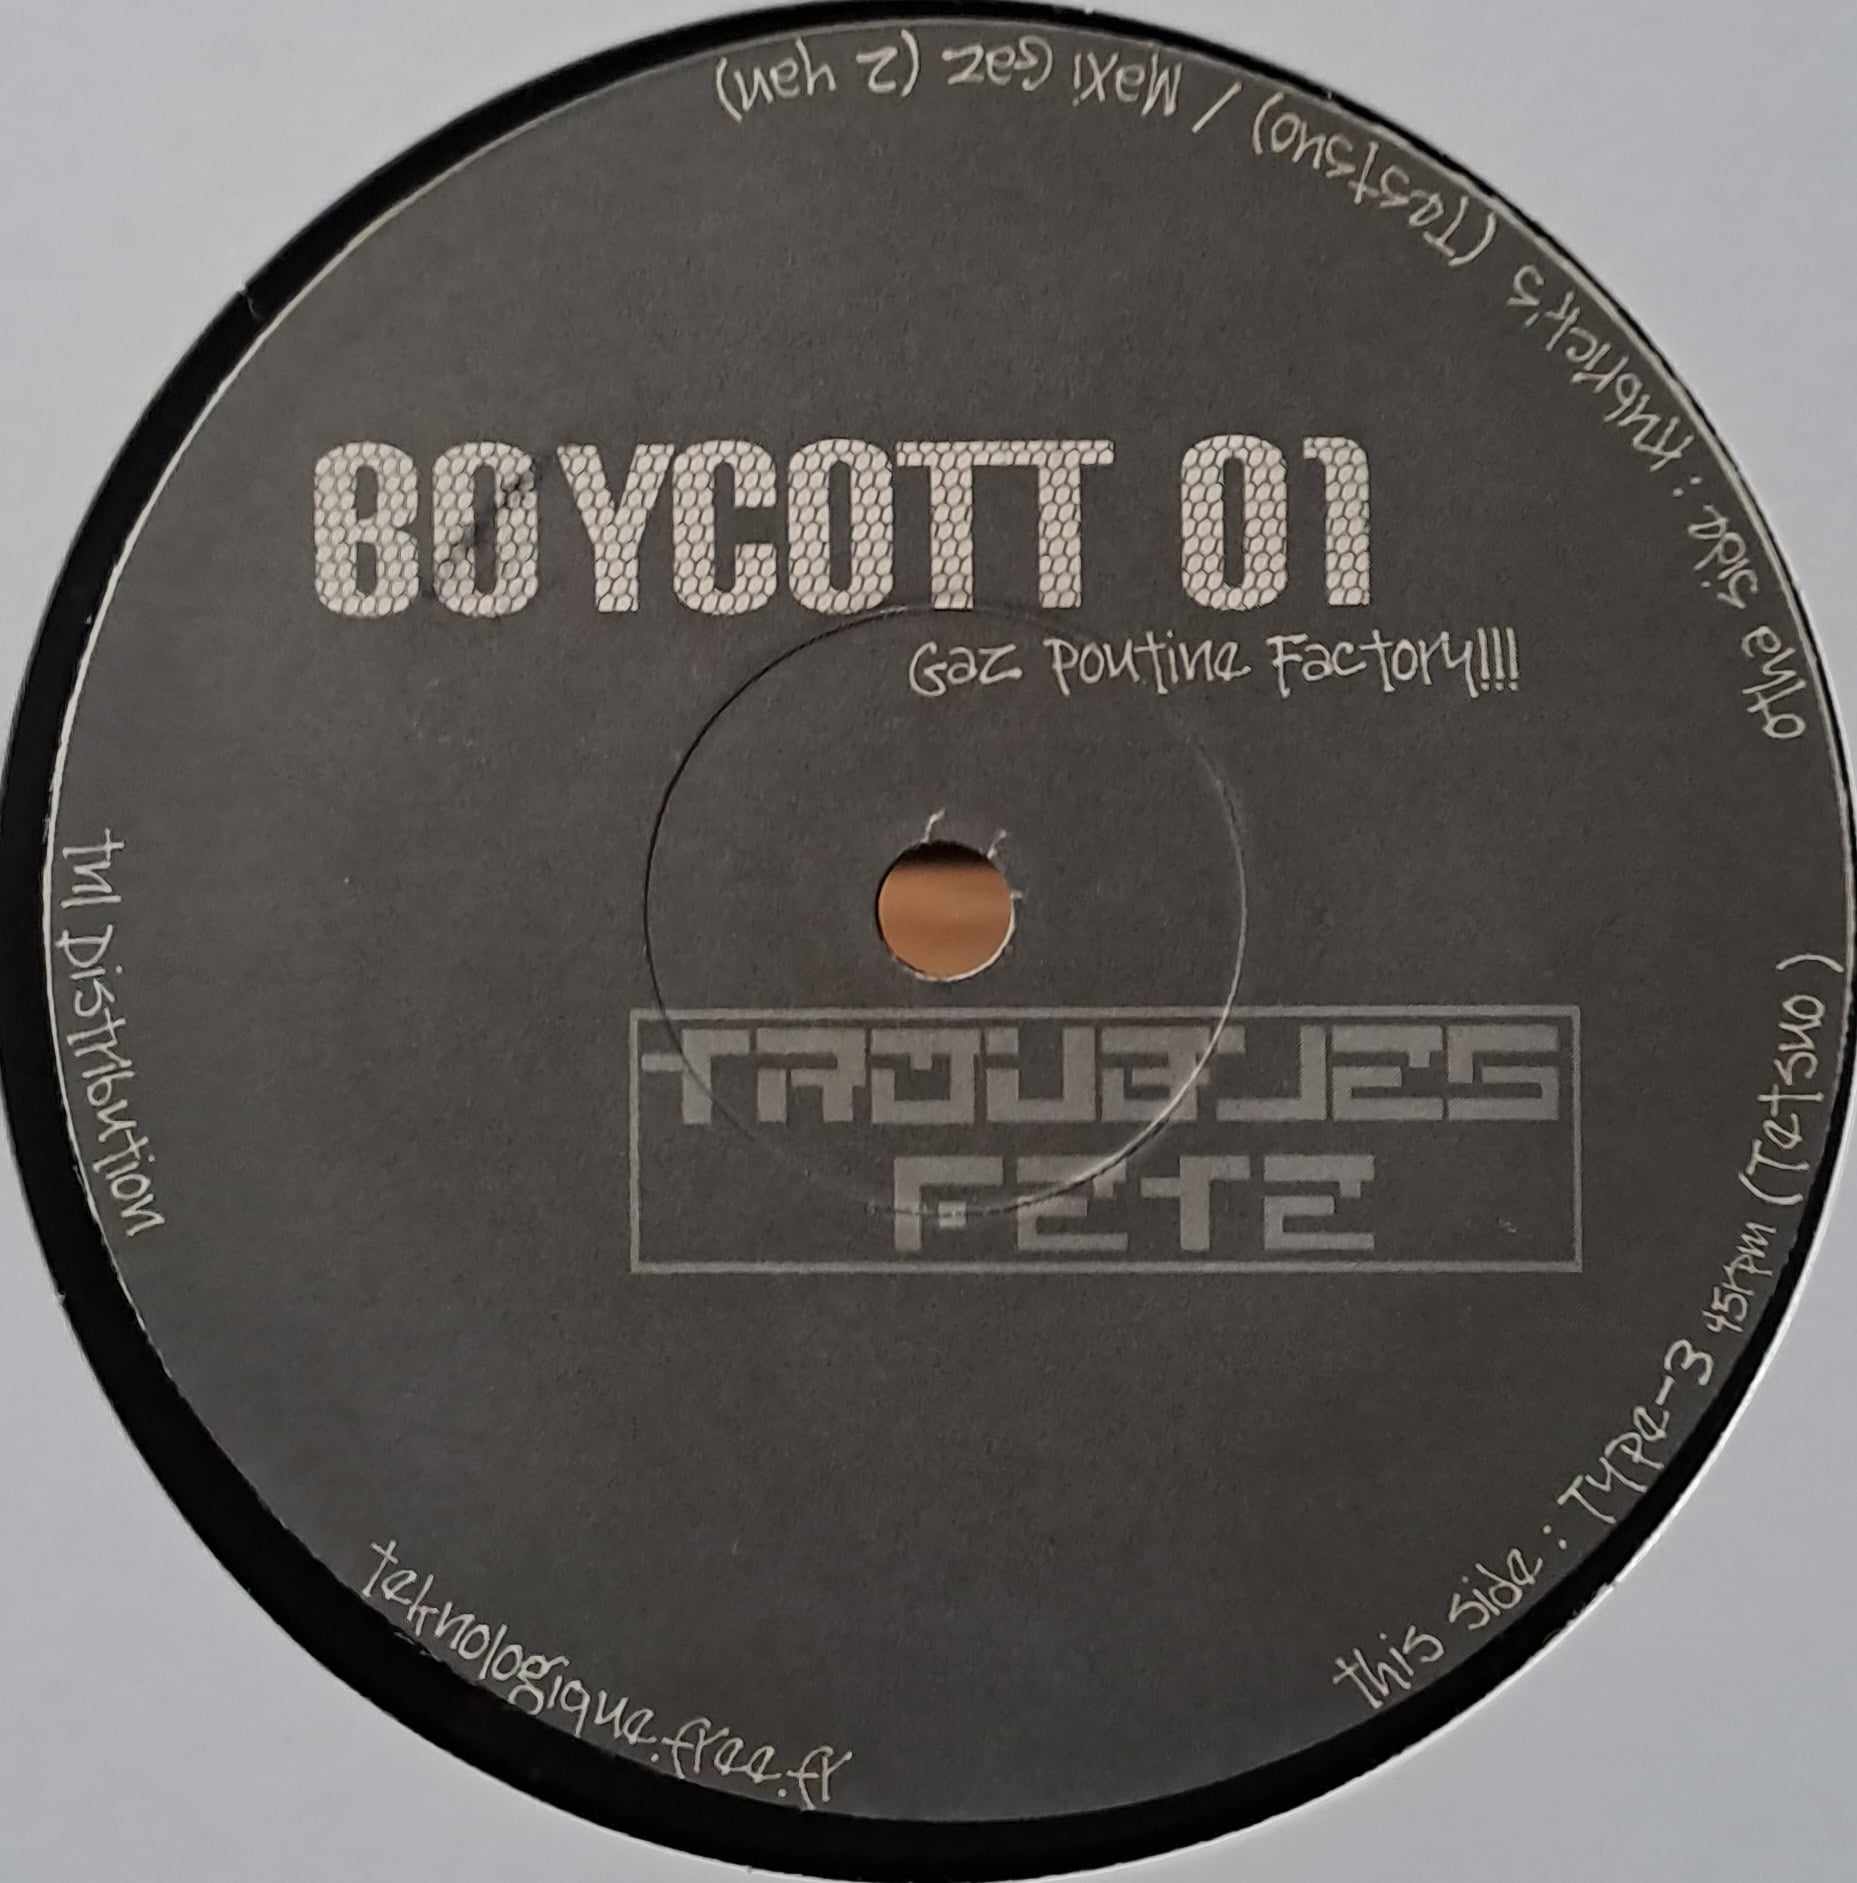 Boycott 001 - vinyle freetekno